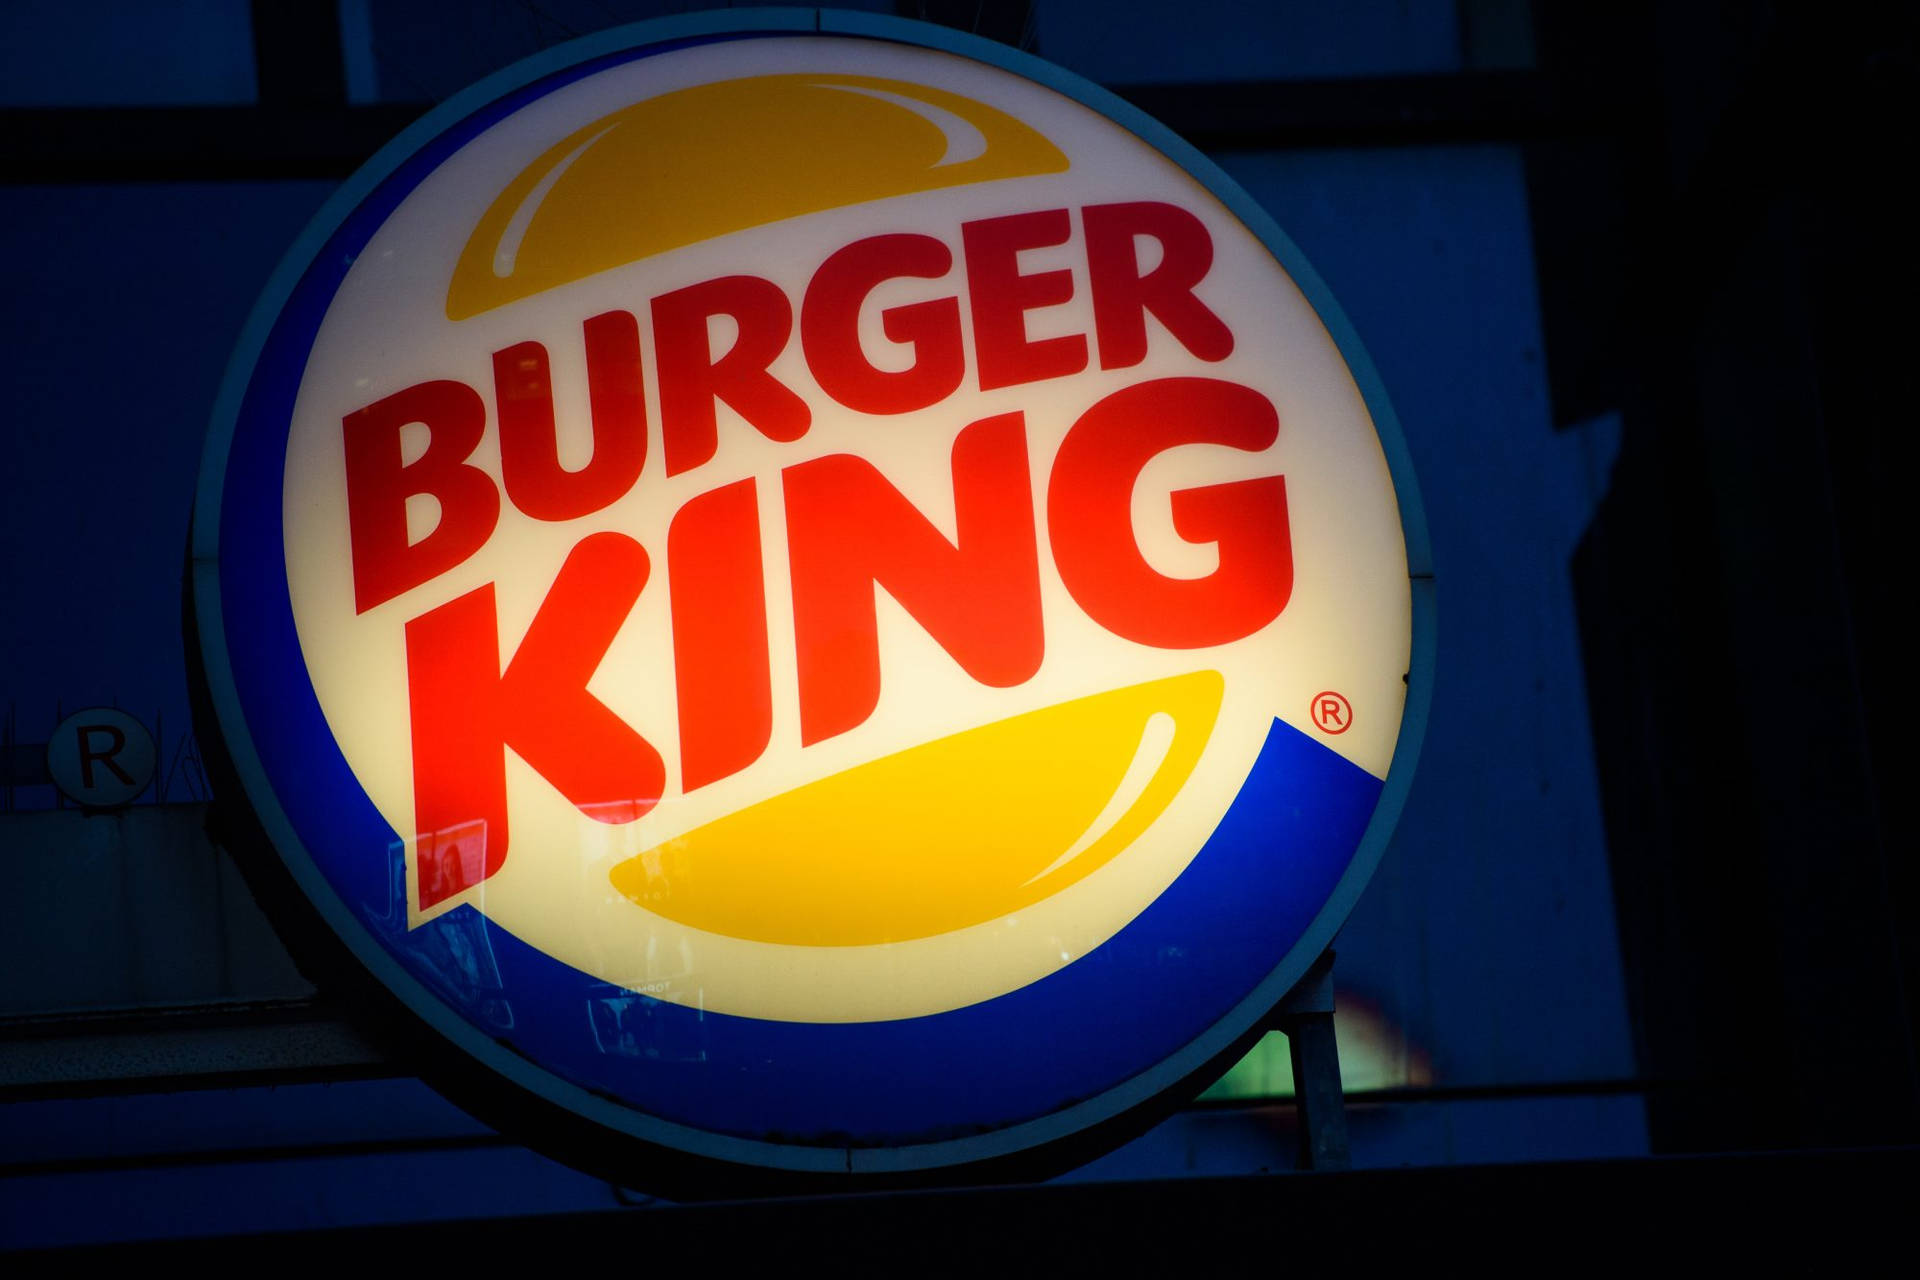 Captivating Night View Of Burger King Signage